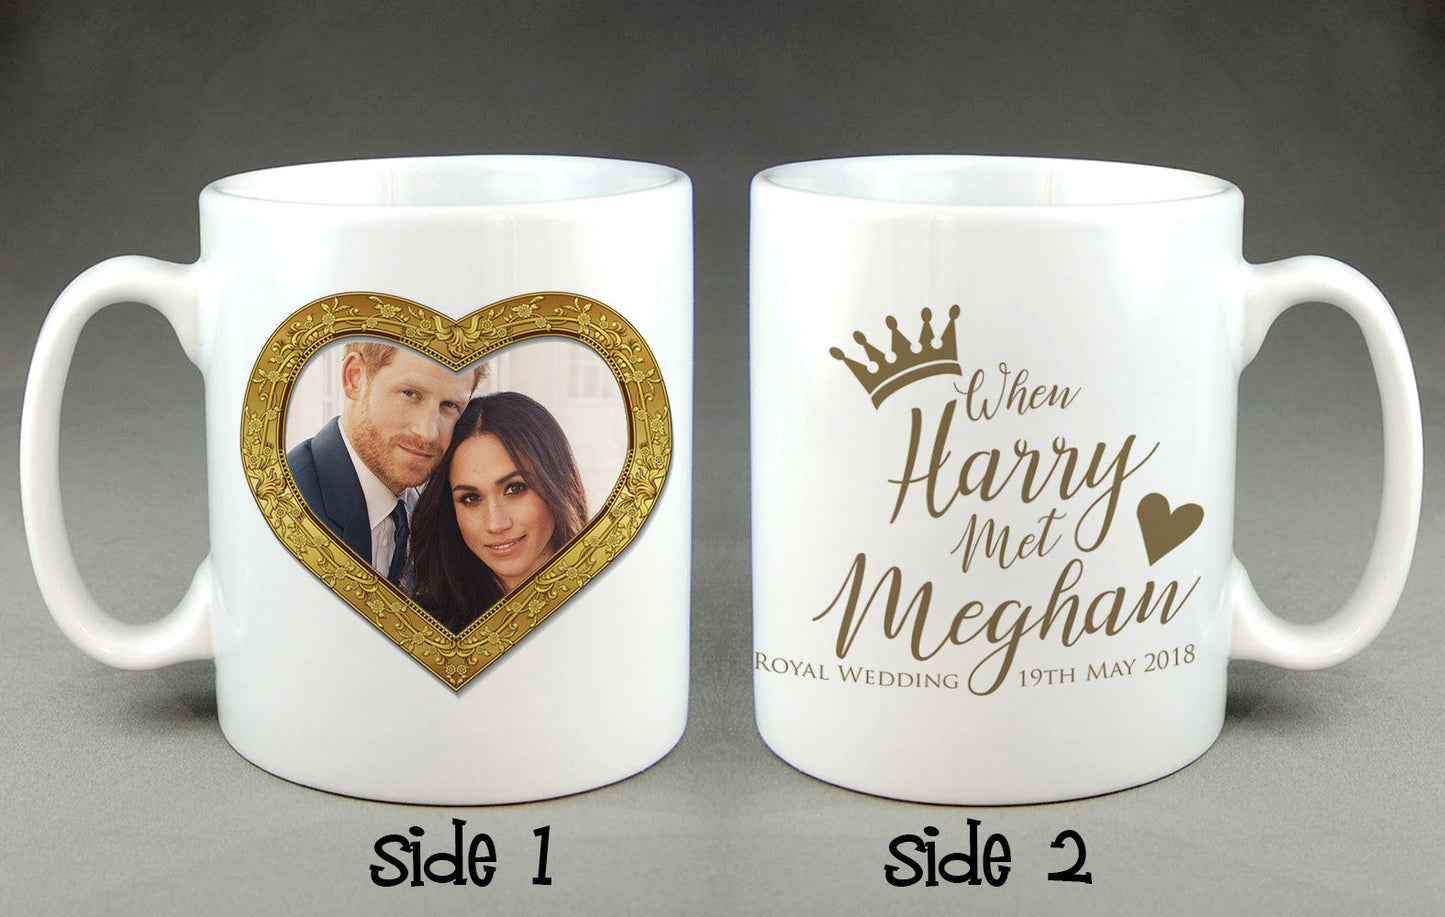 When Harry Met Meghan Mug - Commemorative Royal Wedding #5 10oz Ceramic Cup